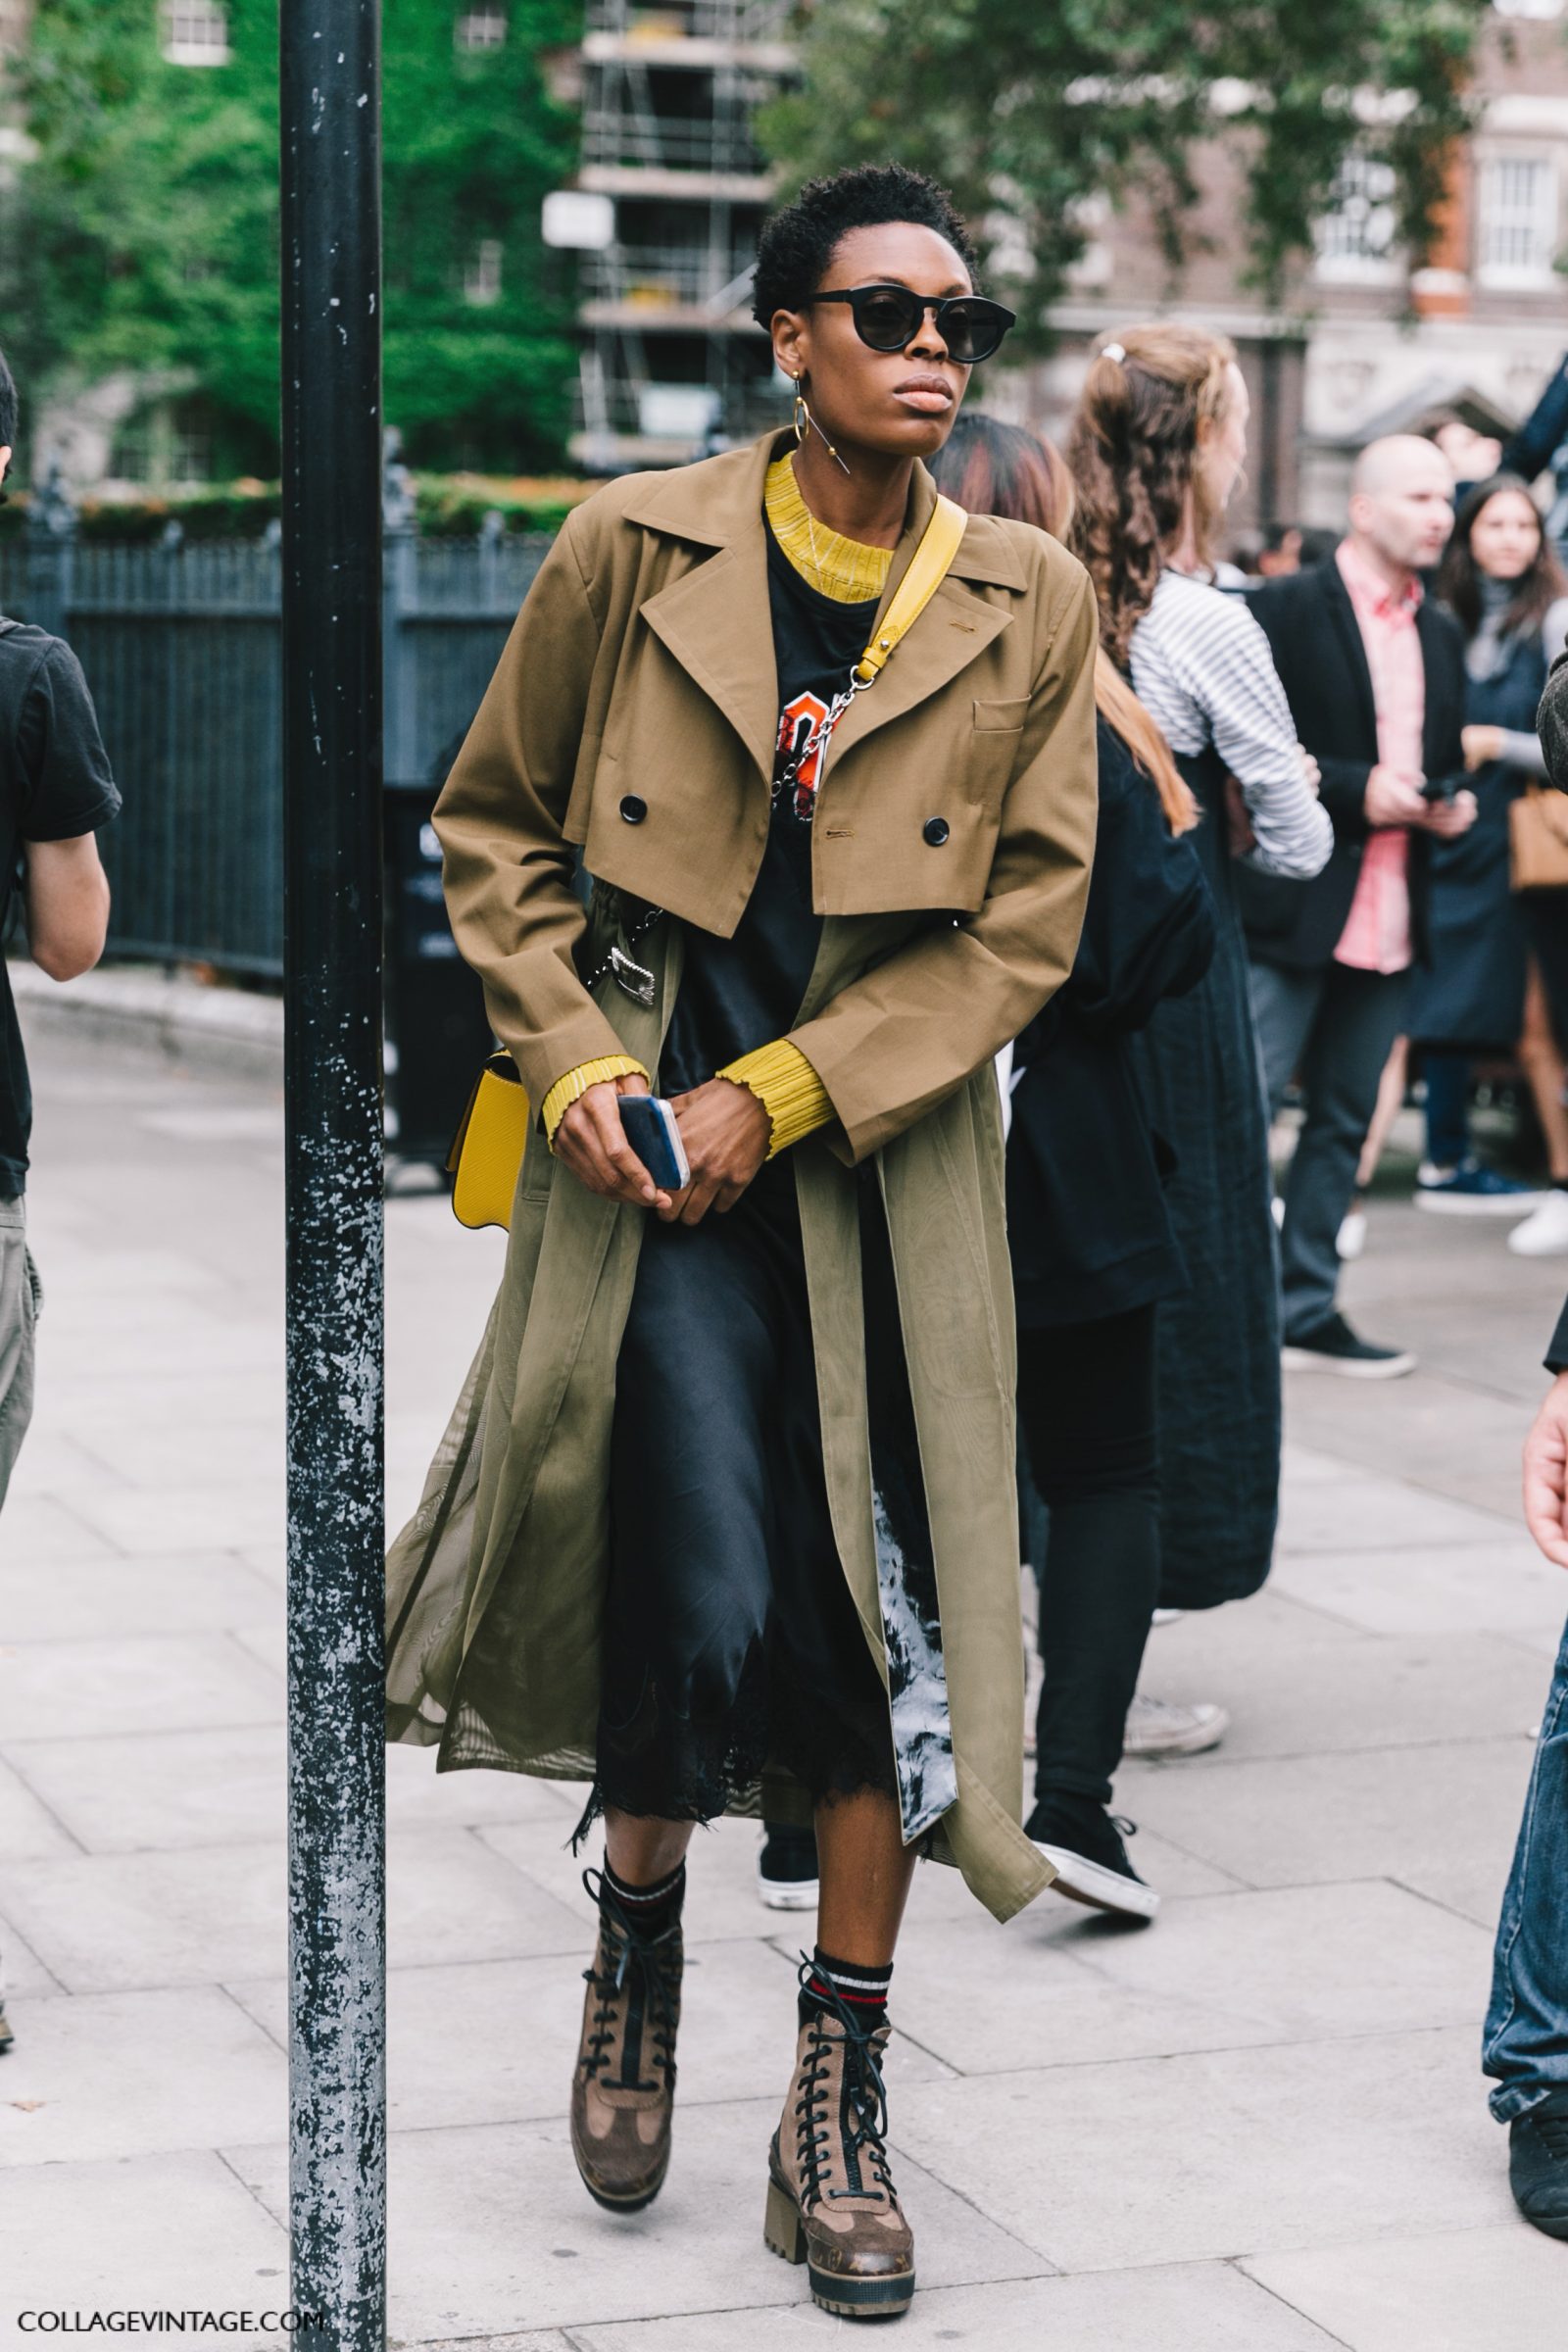 lfw-london_fashion_week_ss17-street_style-outfits-collage_vintage-vintage-roksanda-christopher_kane-joseph-126